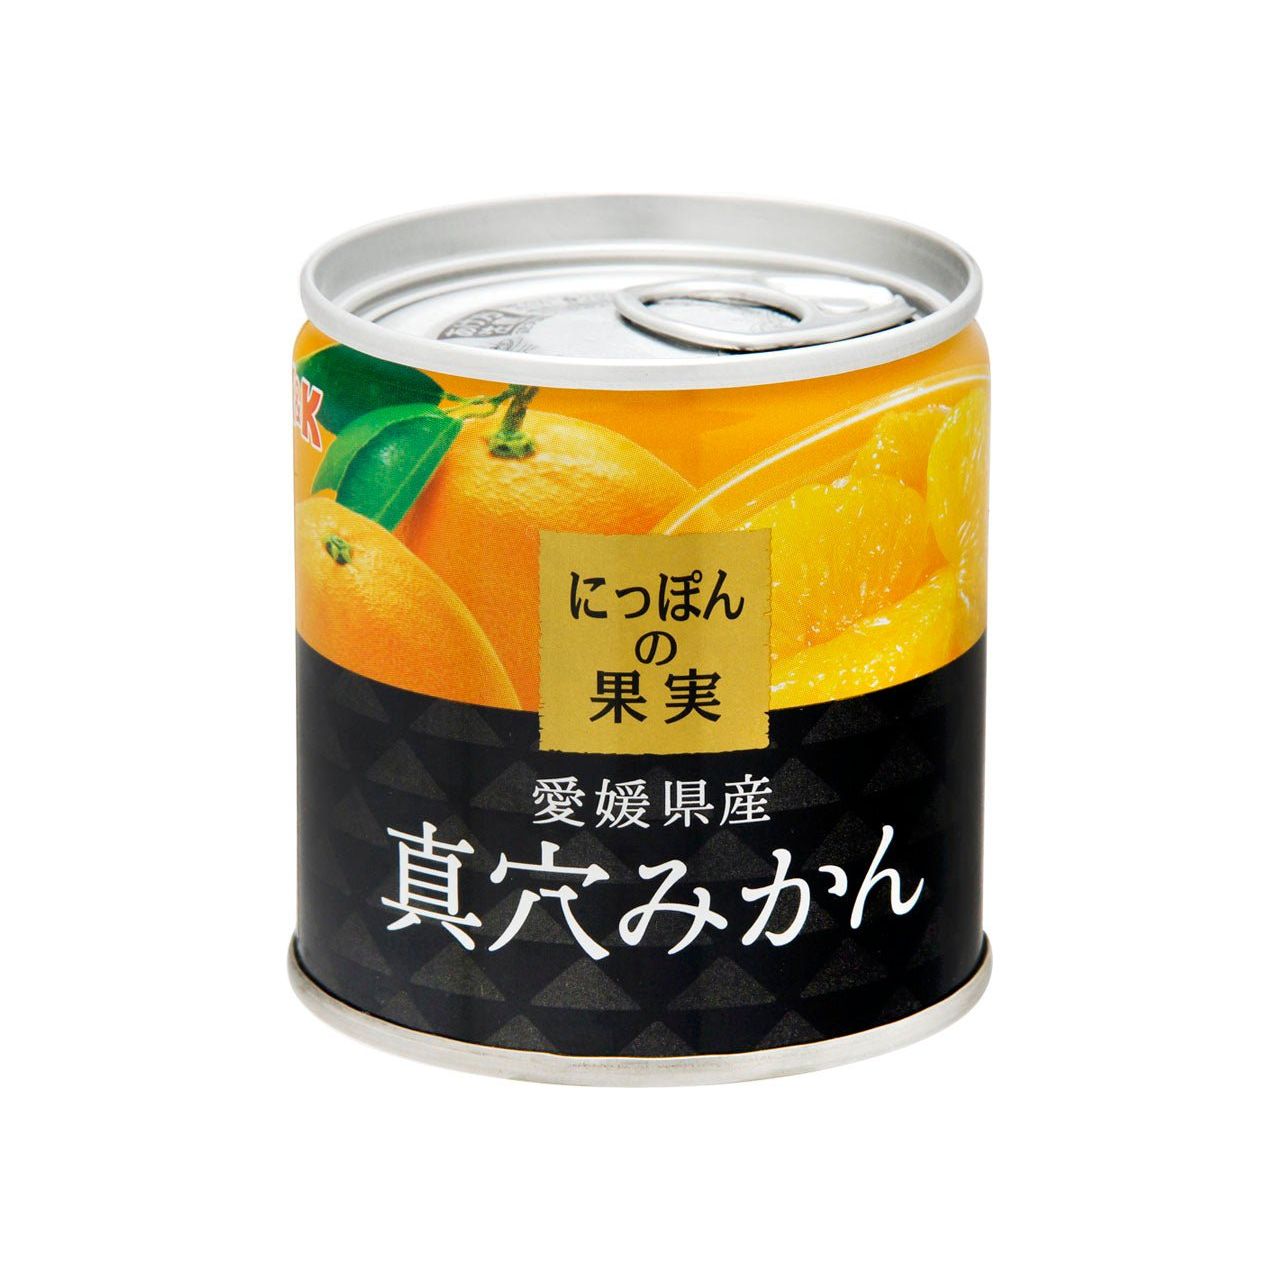 K&K Nippon Fruit Fruit Mandarin